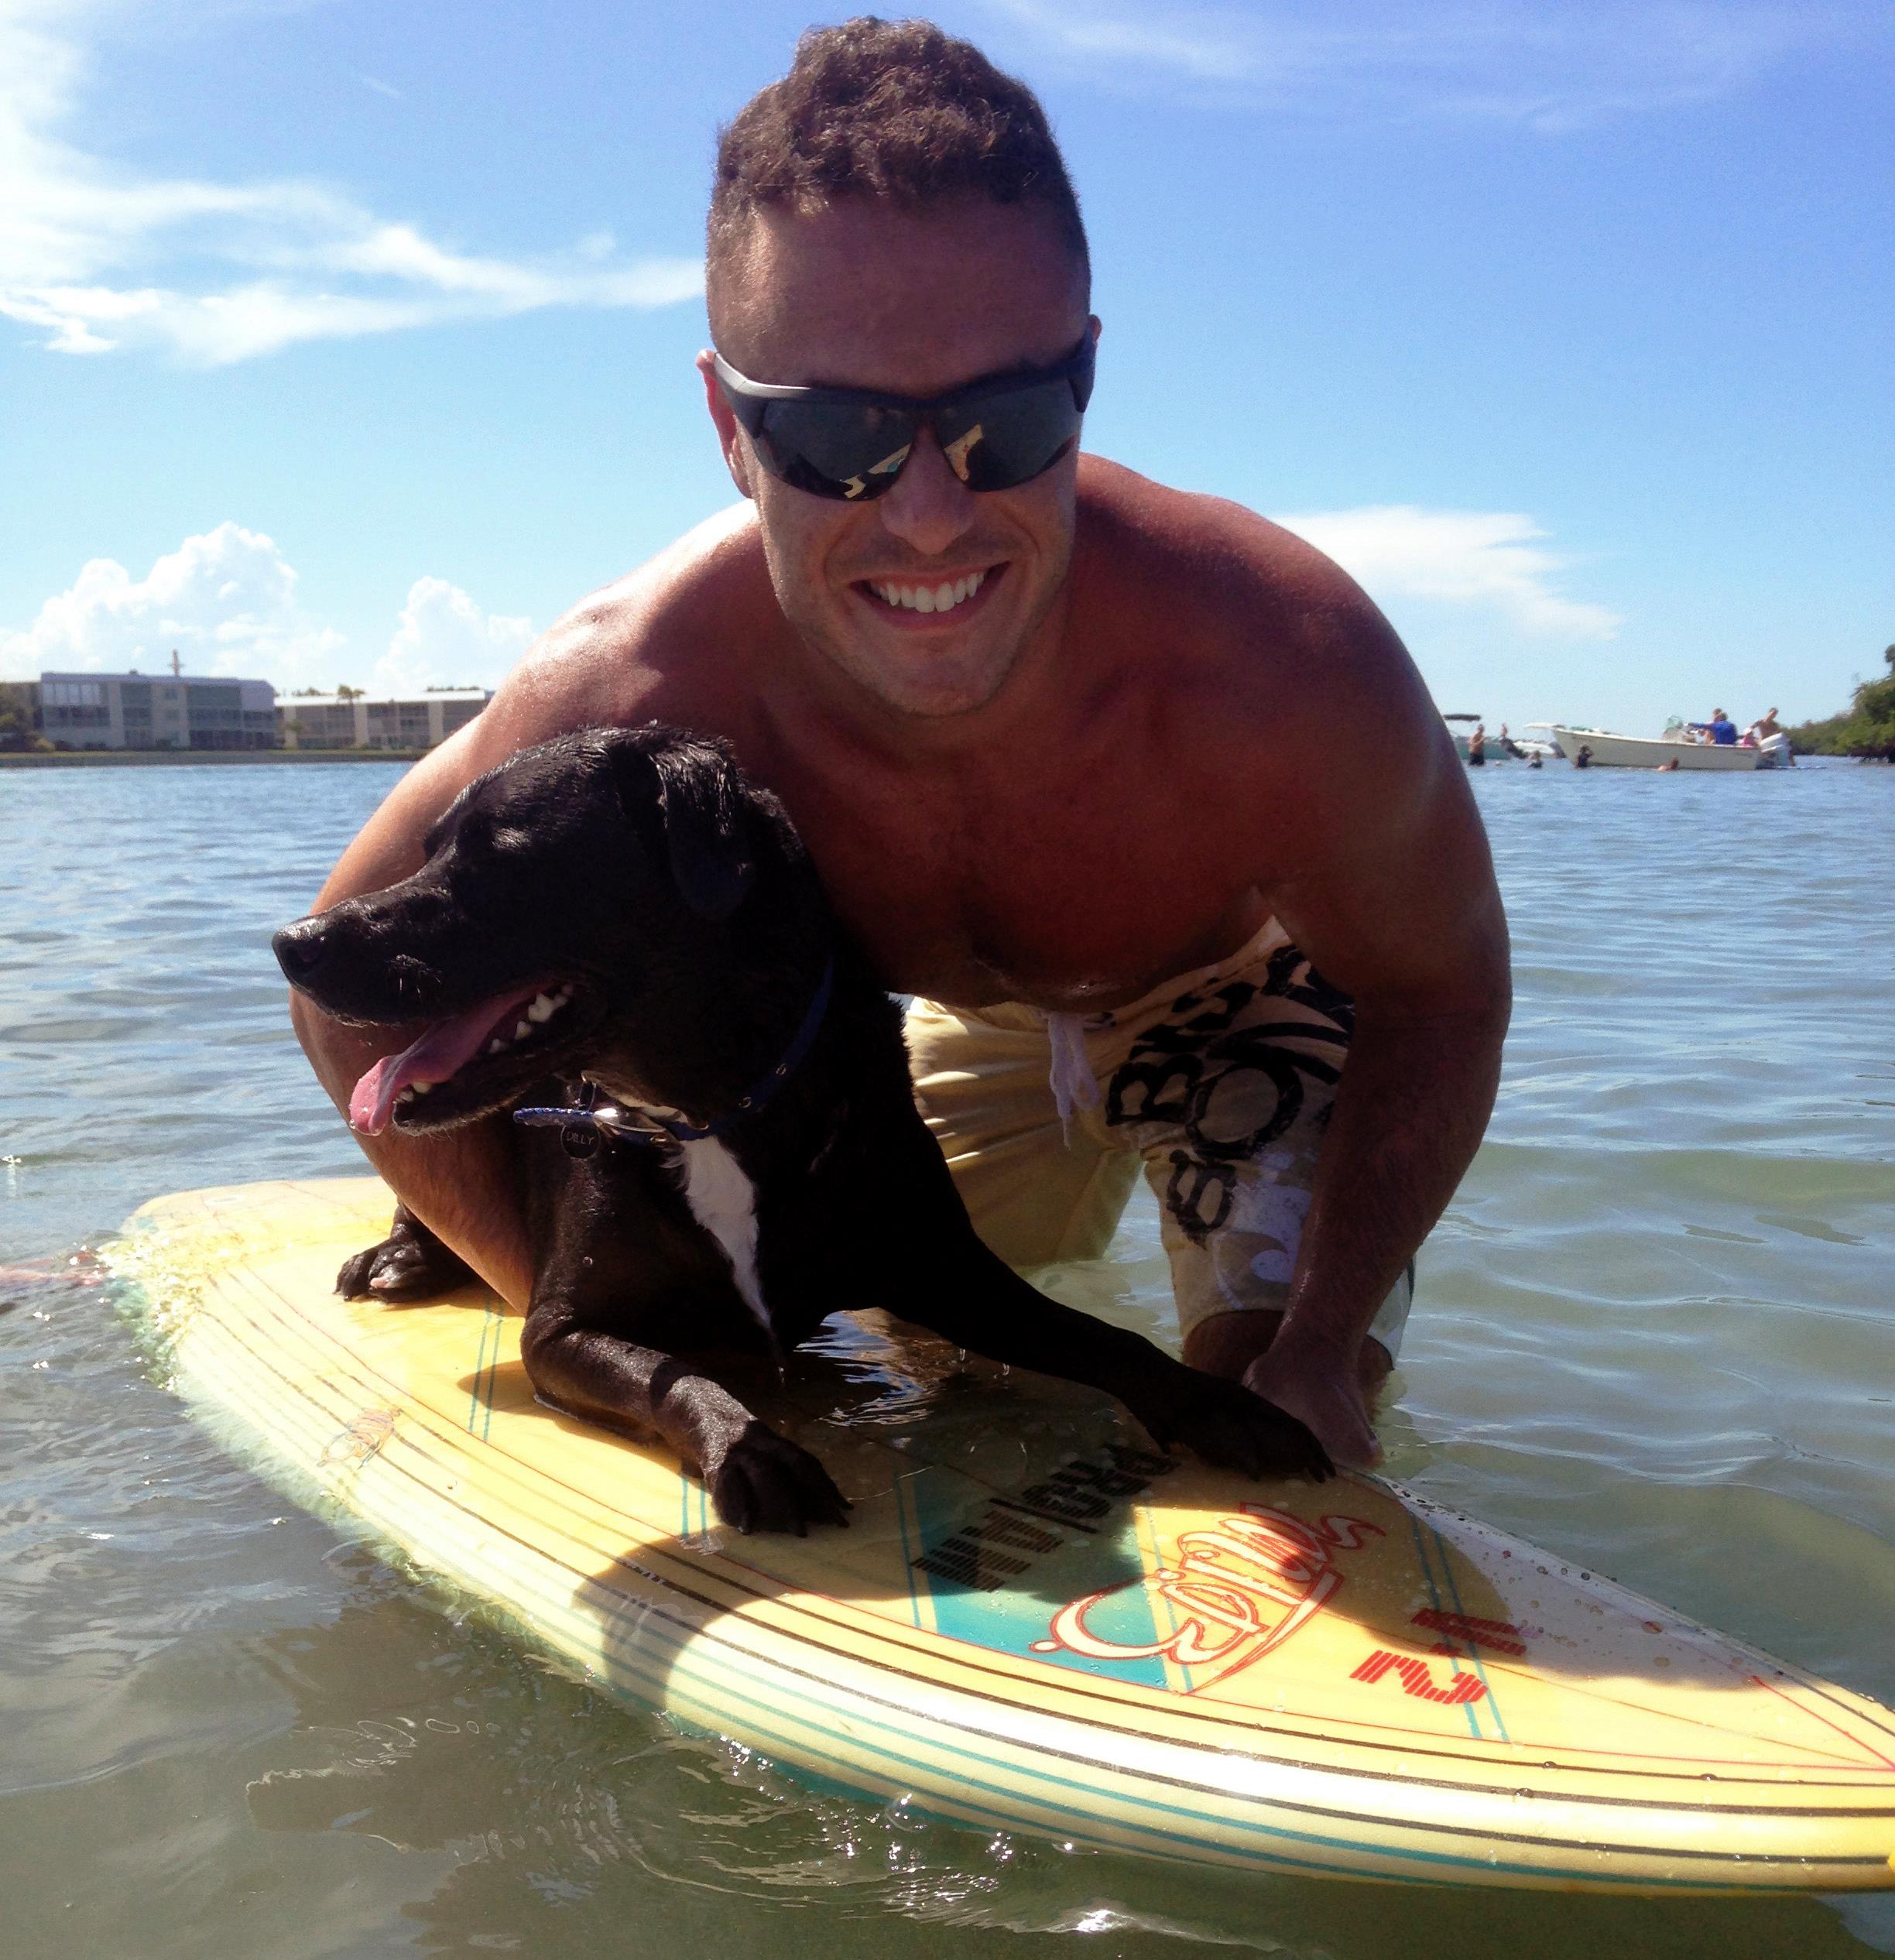 Clint Warren dog surfing